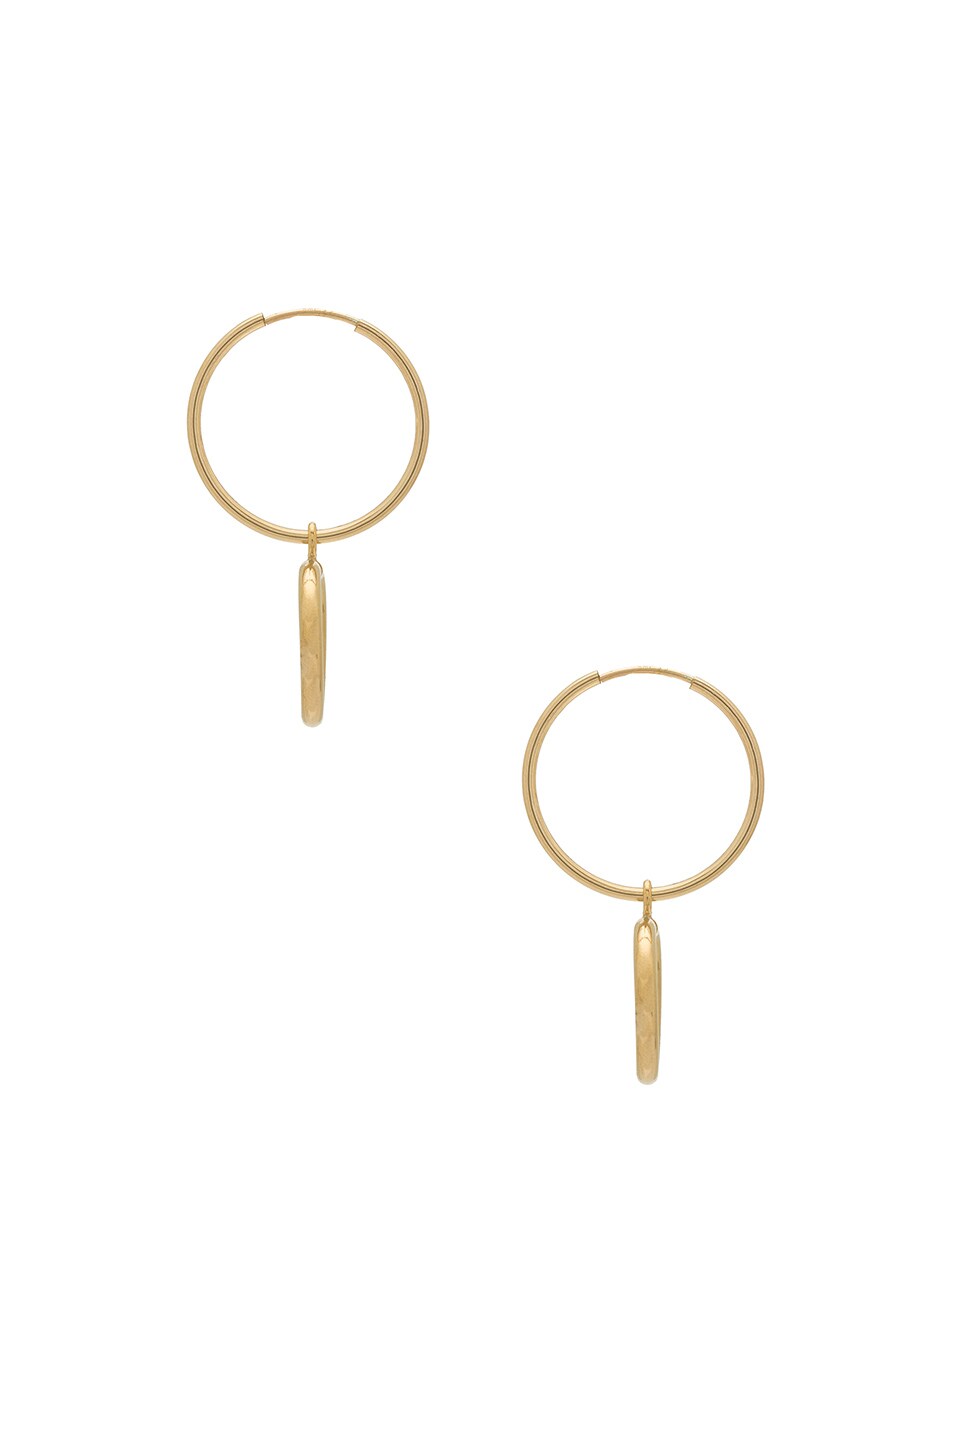 Amarilo Circle Drop Hoop Earrings in Gold | REVOLVE